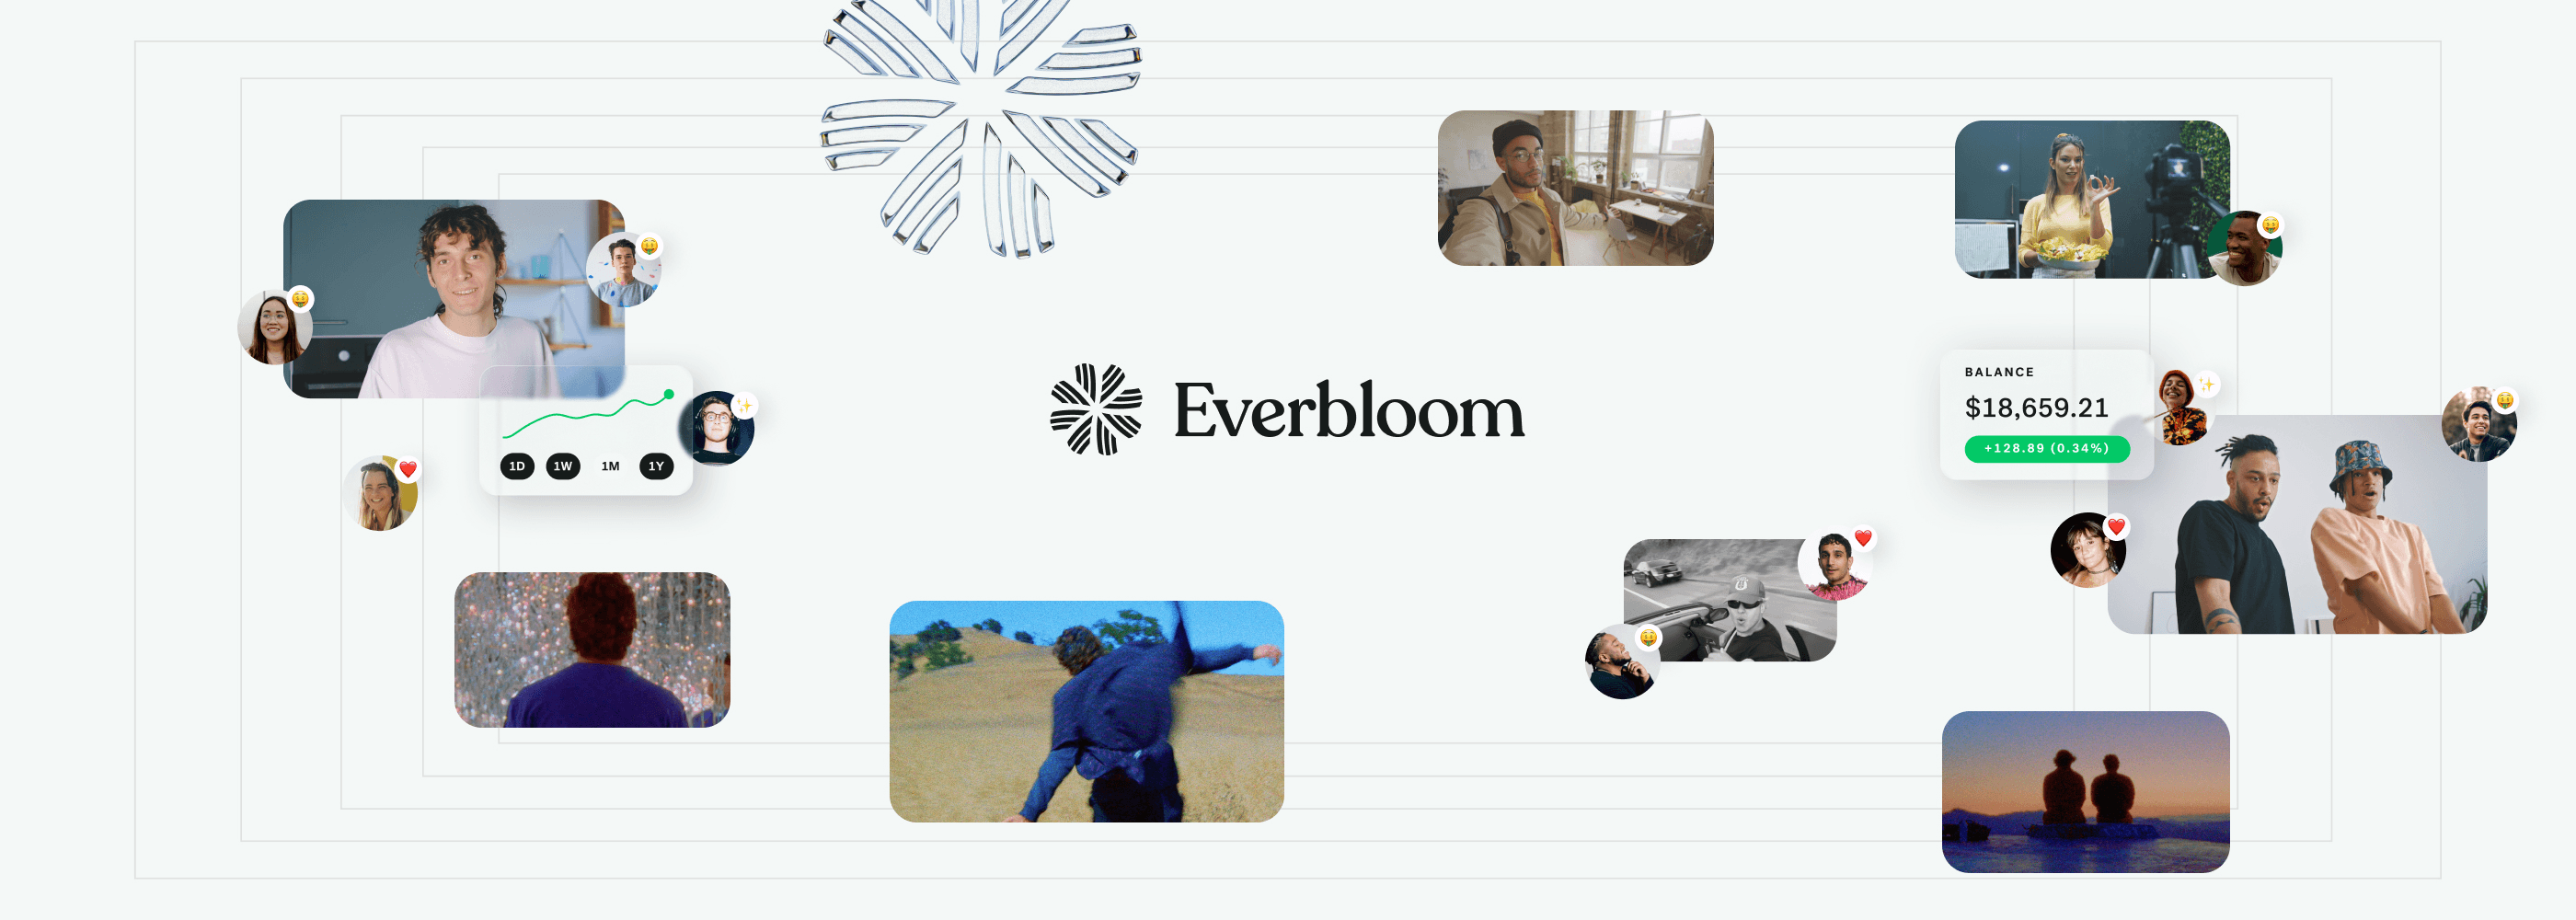 Everbloom 横幅